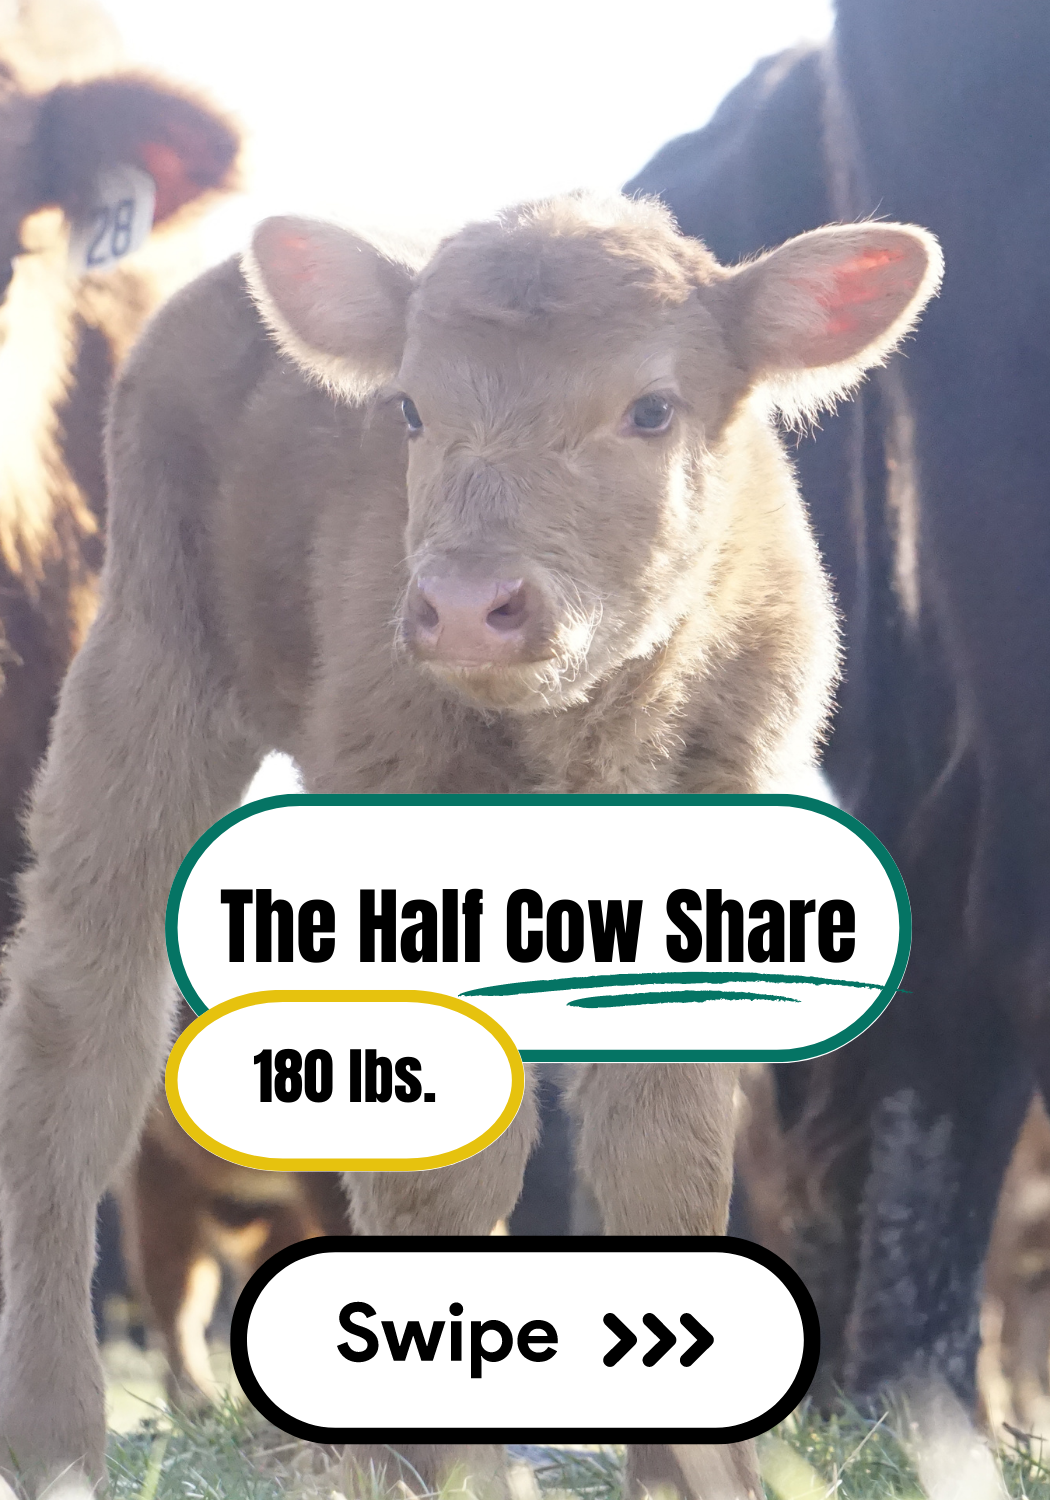 Half Cow Deposit - $800